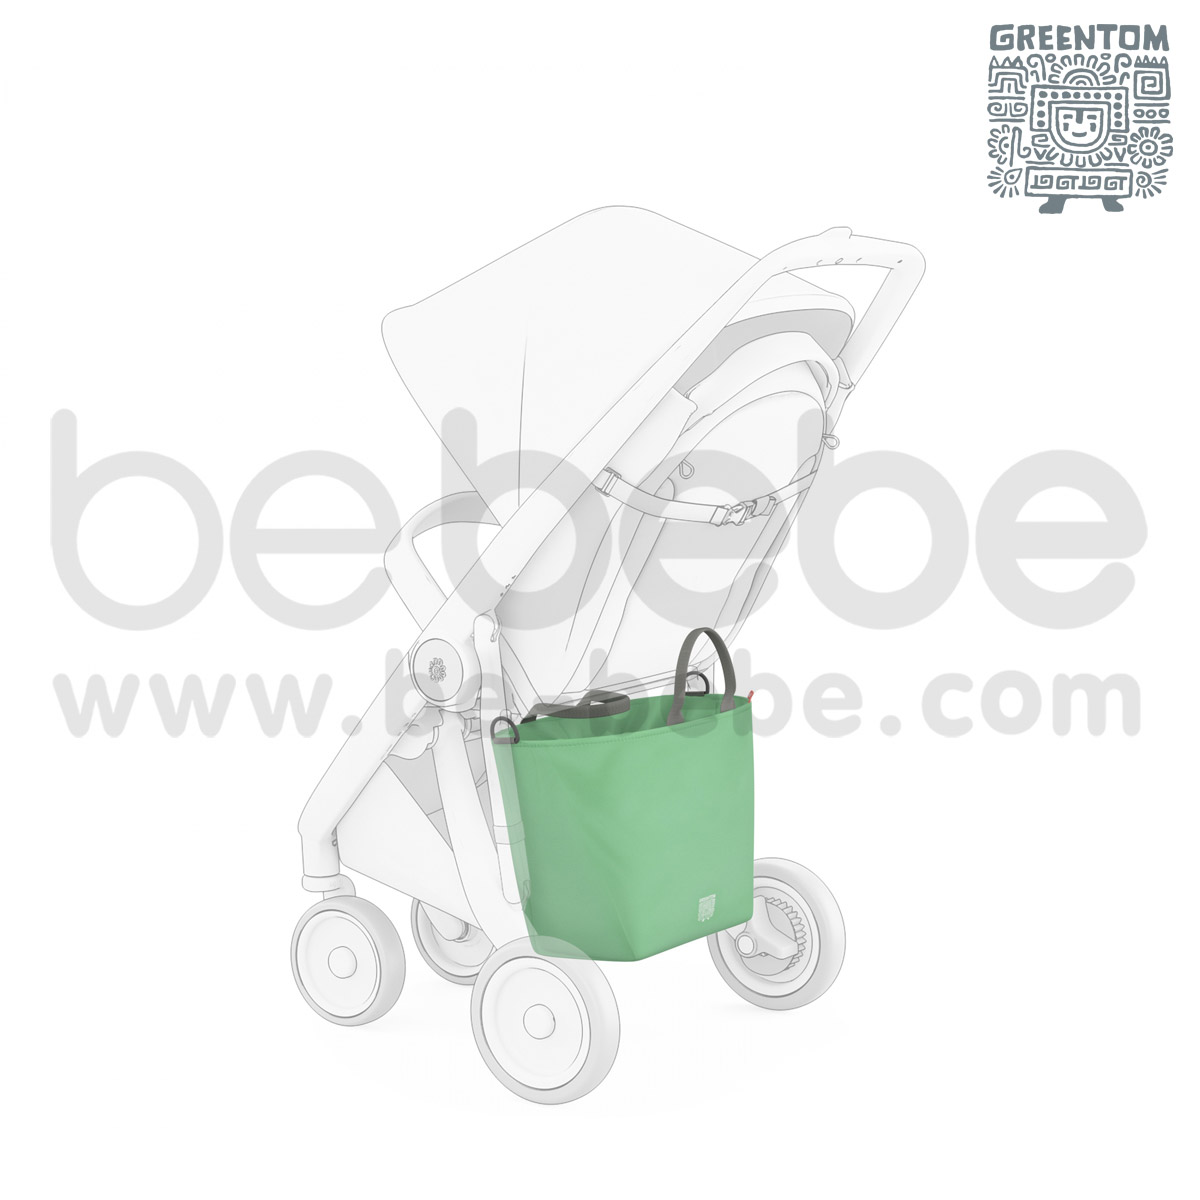 Greentom : กระเป๋า Shopping Bag / ส้ม